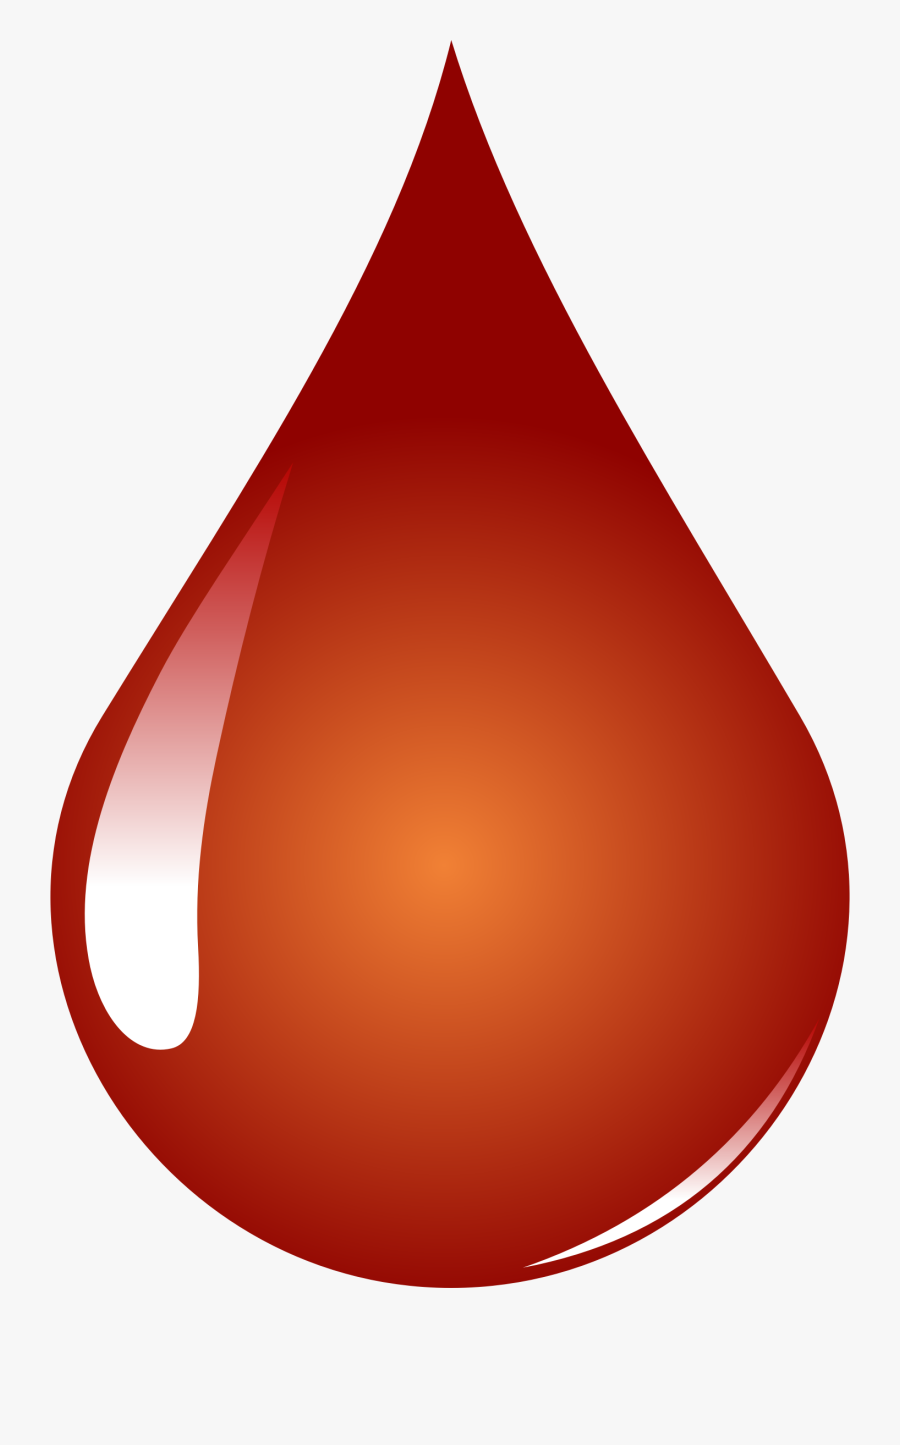 Blood Drop - Droplet Of Blood Clipart, Transparent Clipart